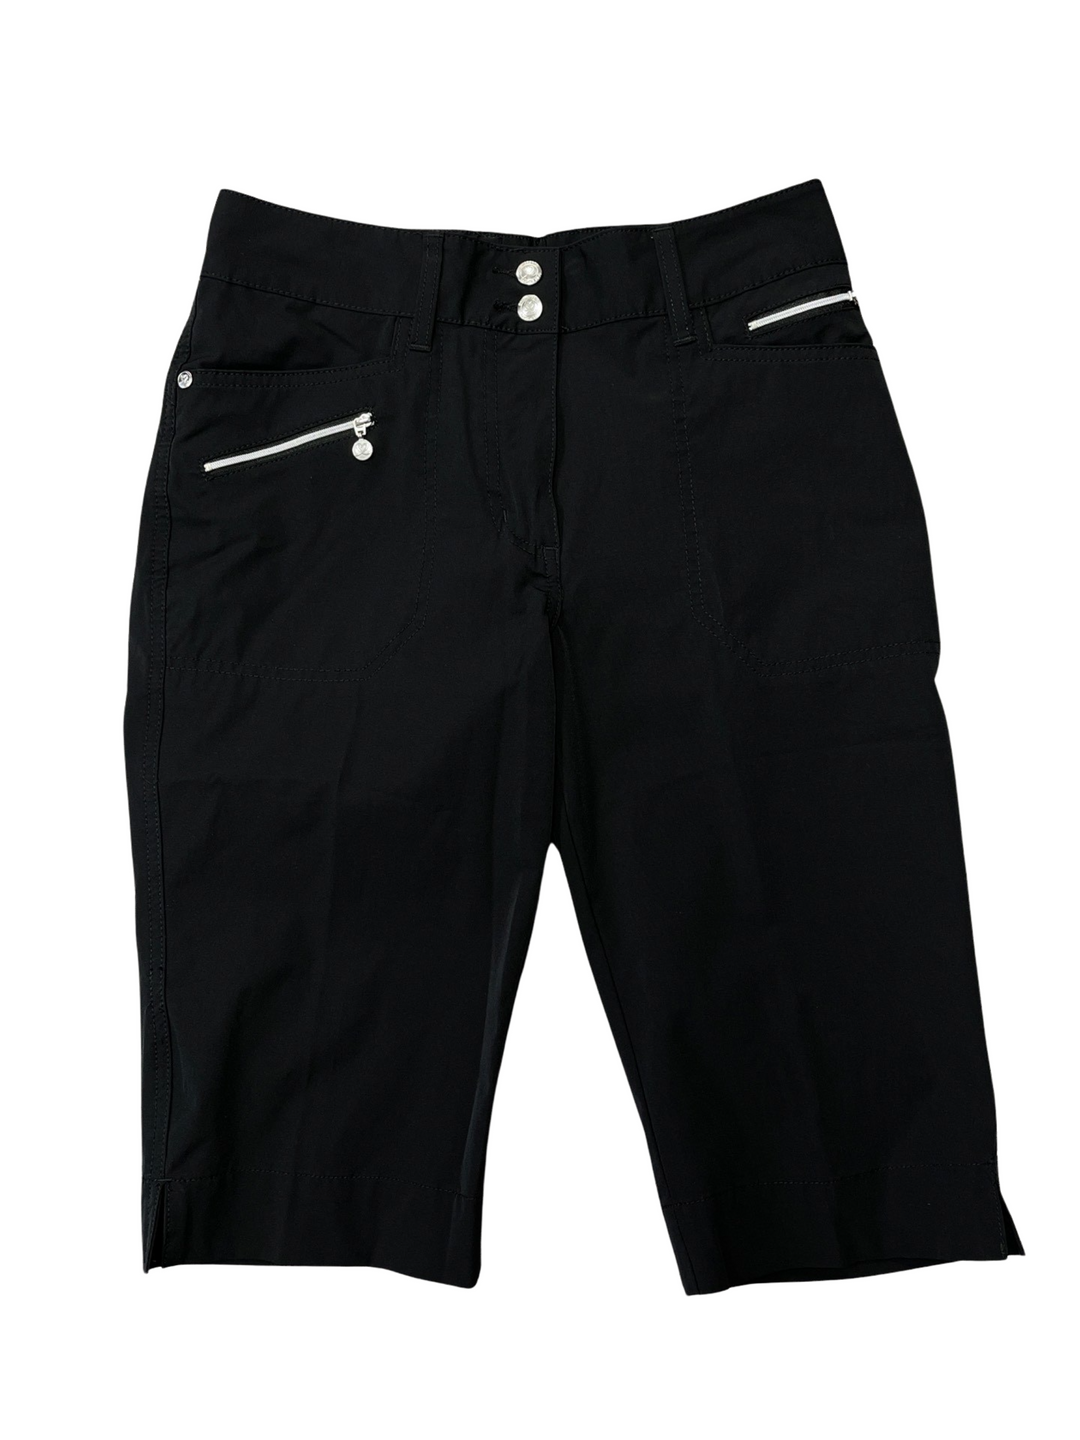 Daily Sports Bermuda Shorts - Black - Size 6 - Skorzie